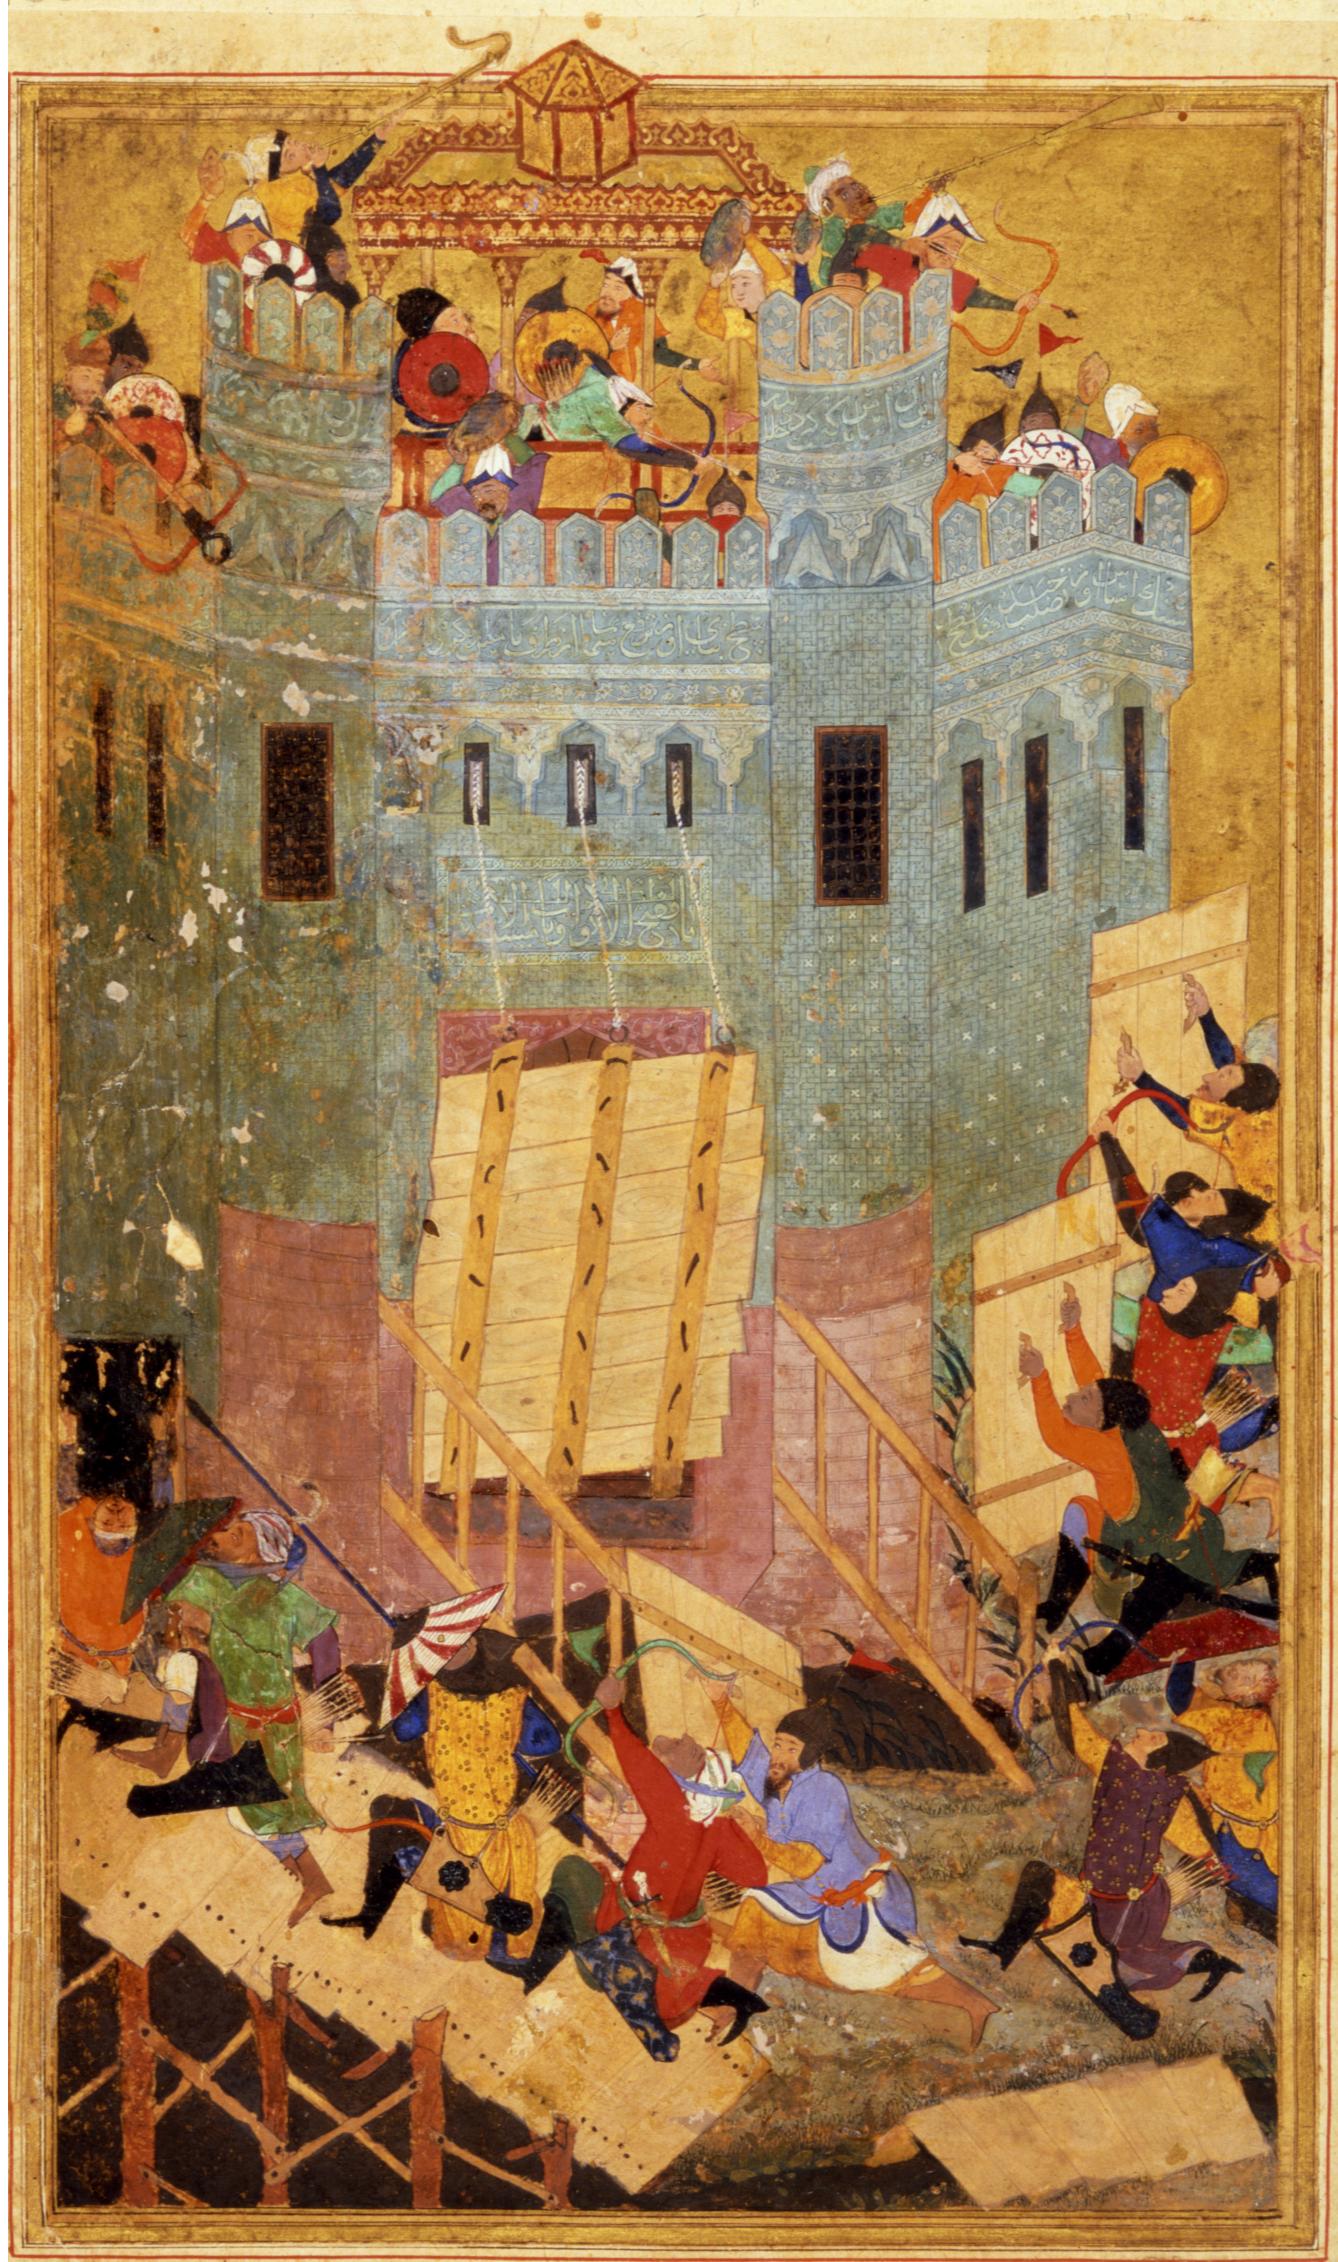 File:Behzad - Siege of Smyrna - Plate 11.jpg - Wikipedia